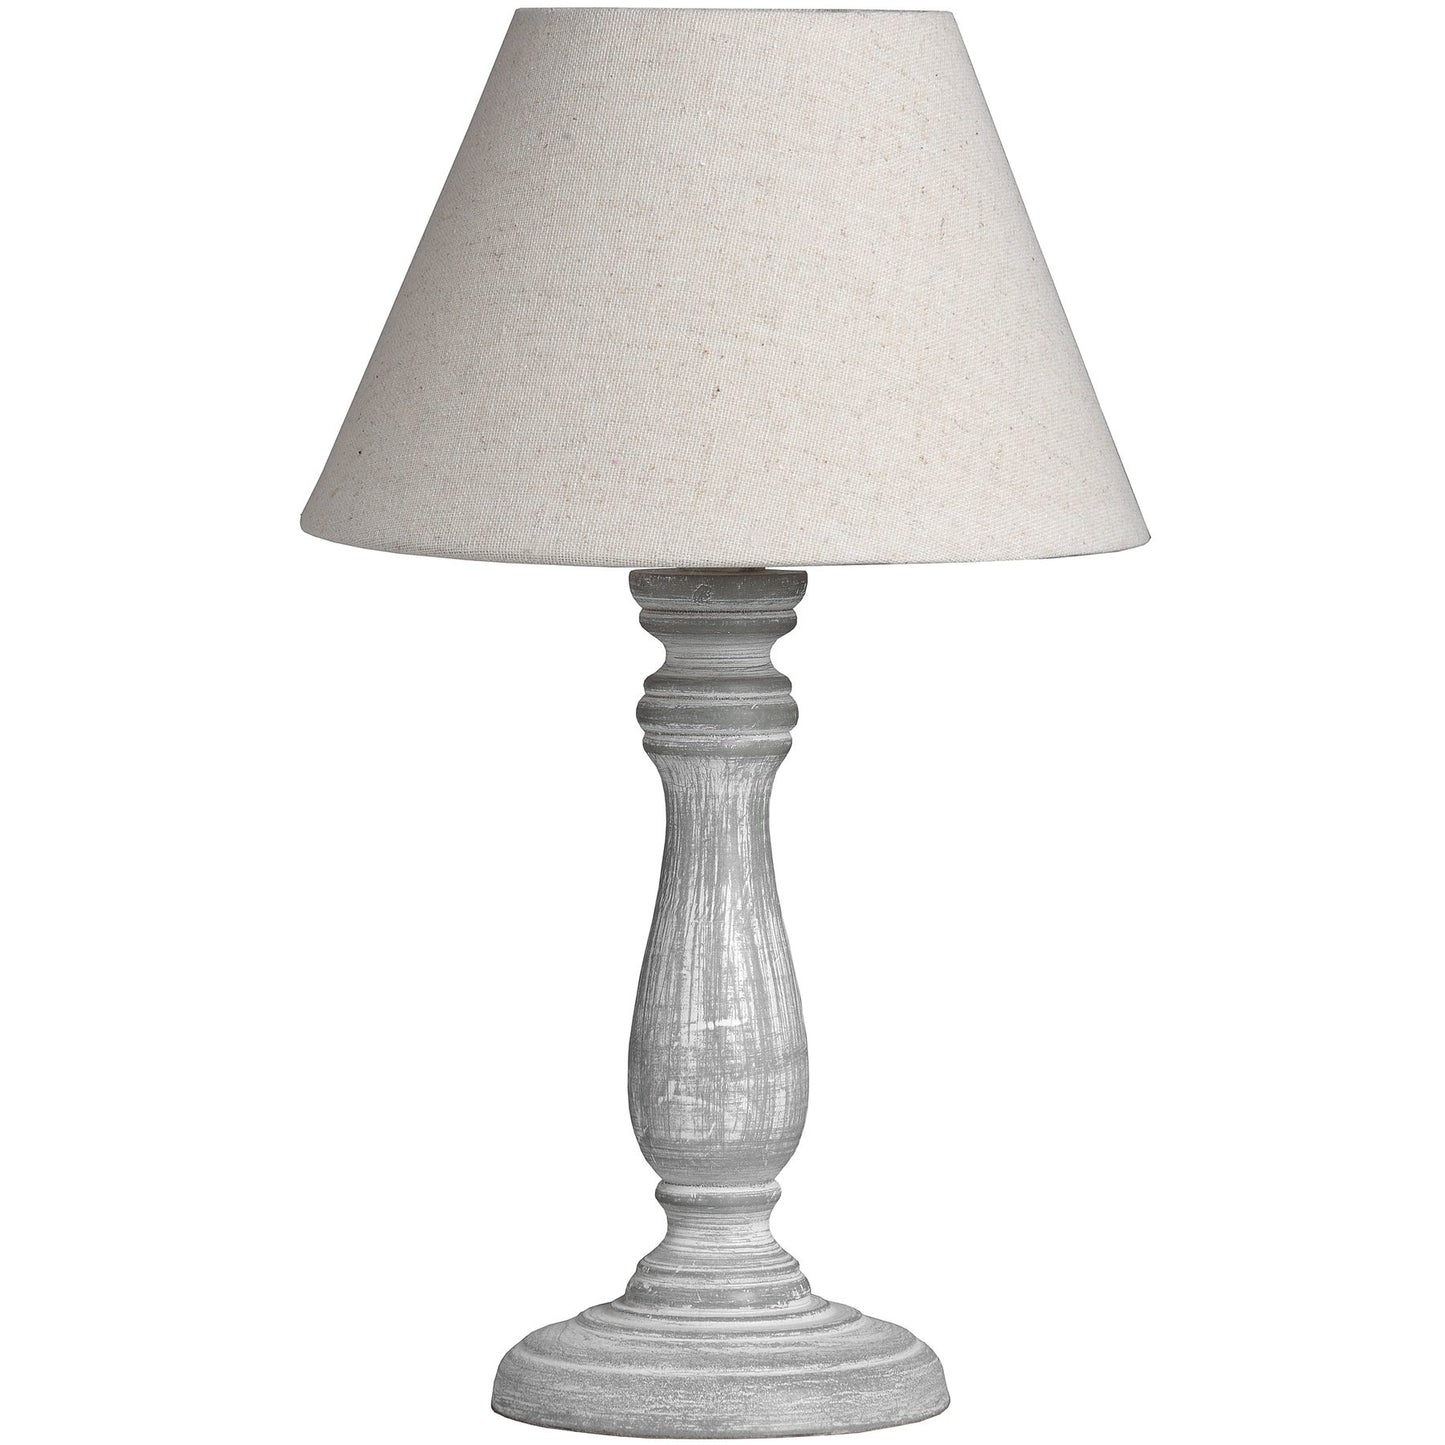 Paros Table Lamp-Grey Wood Washed Effect Table Lamp freeshipping - lovescottish